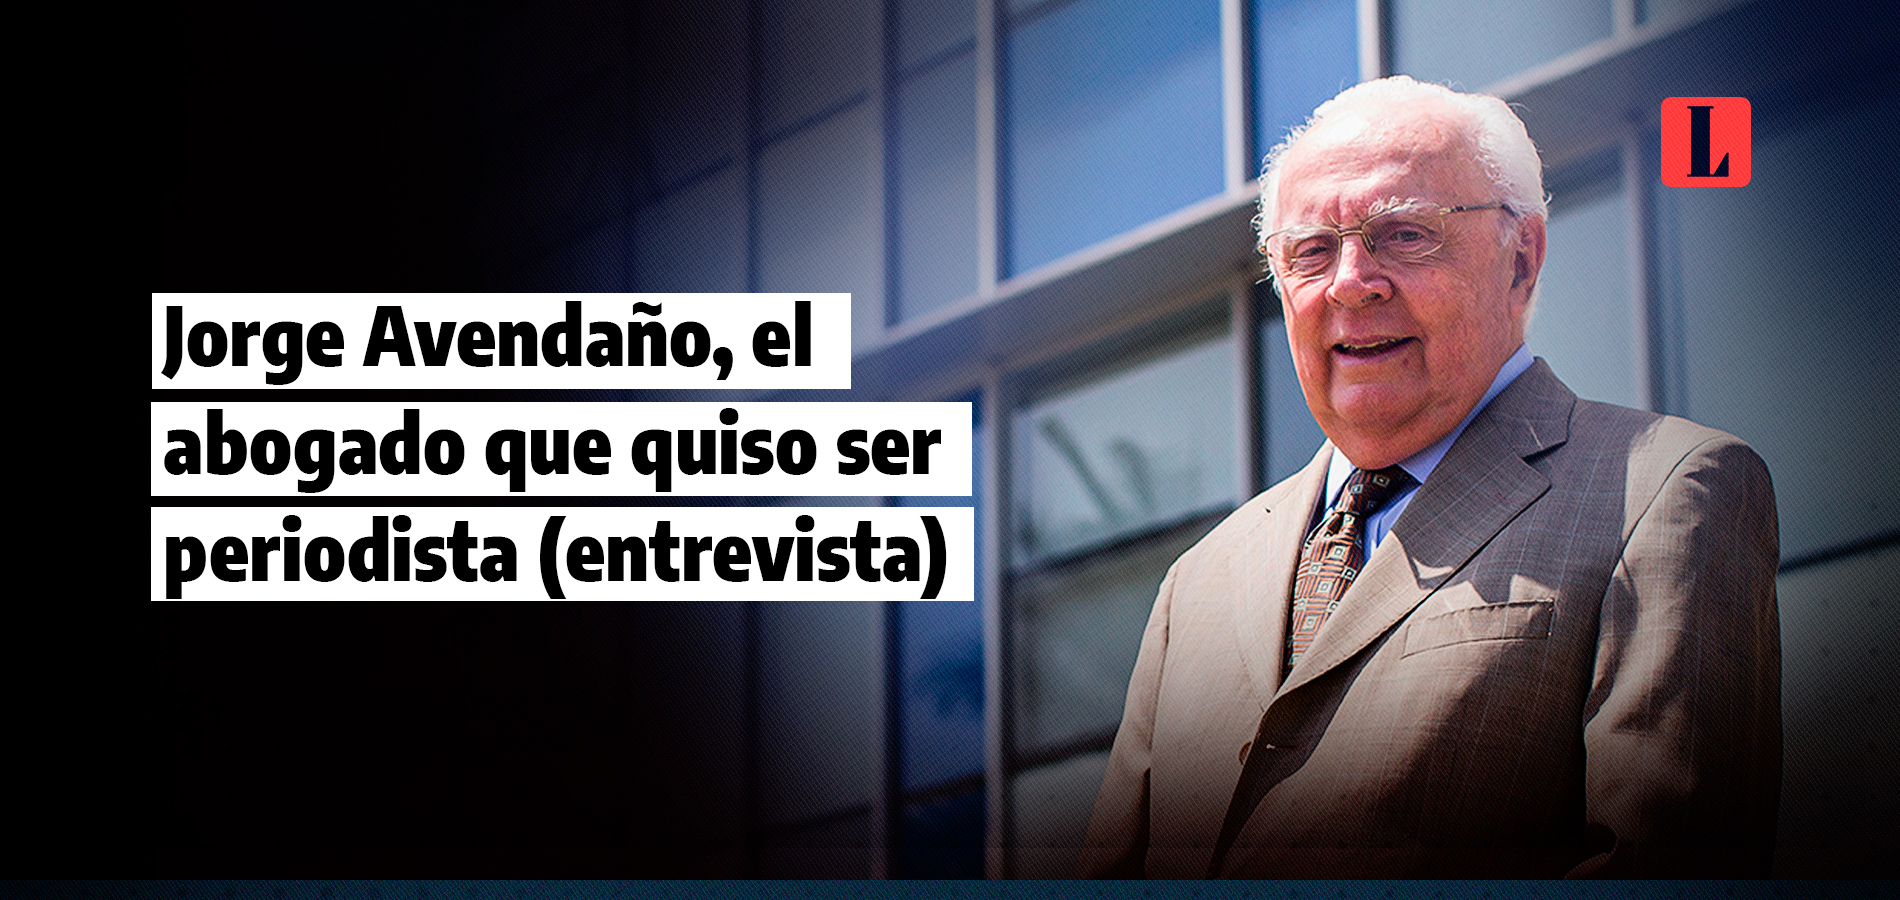 Jorge Avendaño, el abogado que quiso ser periodista (entrevista)